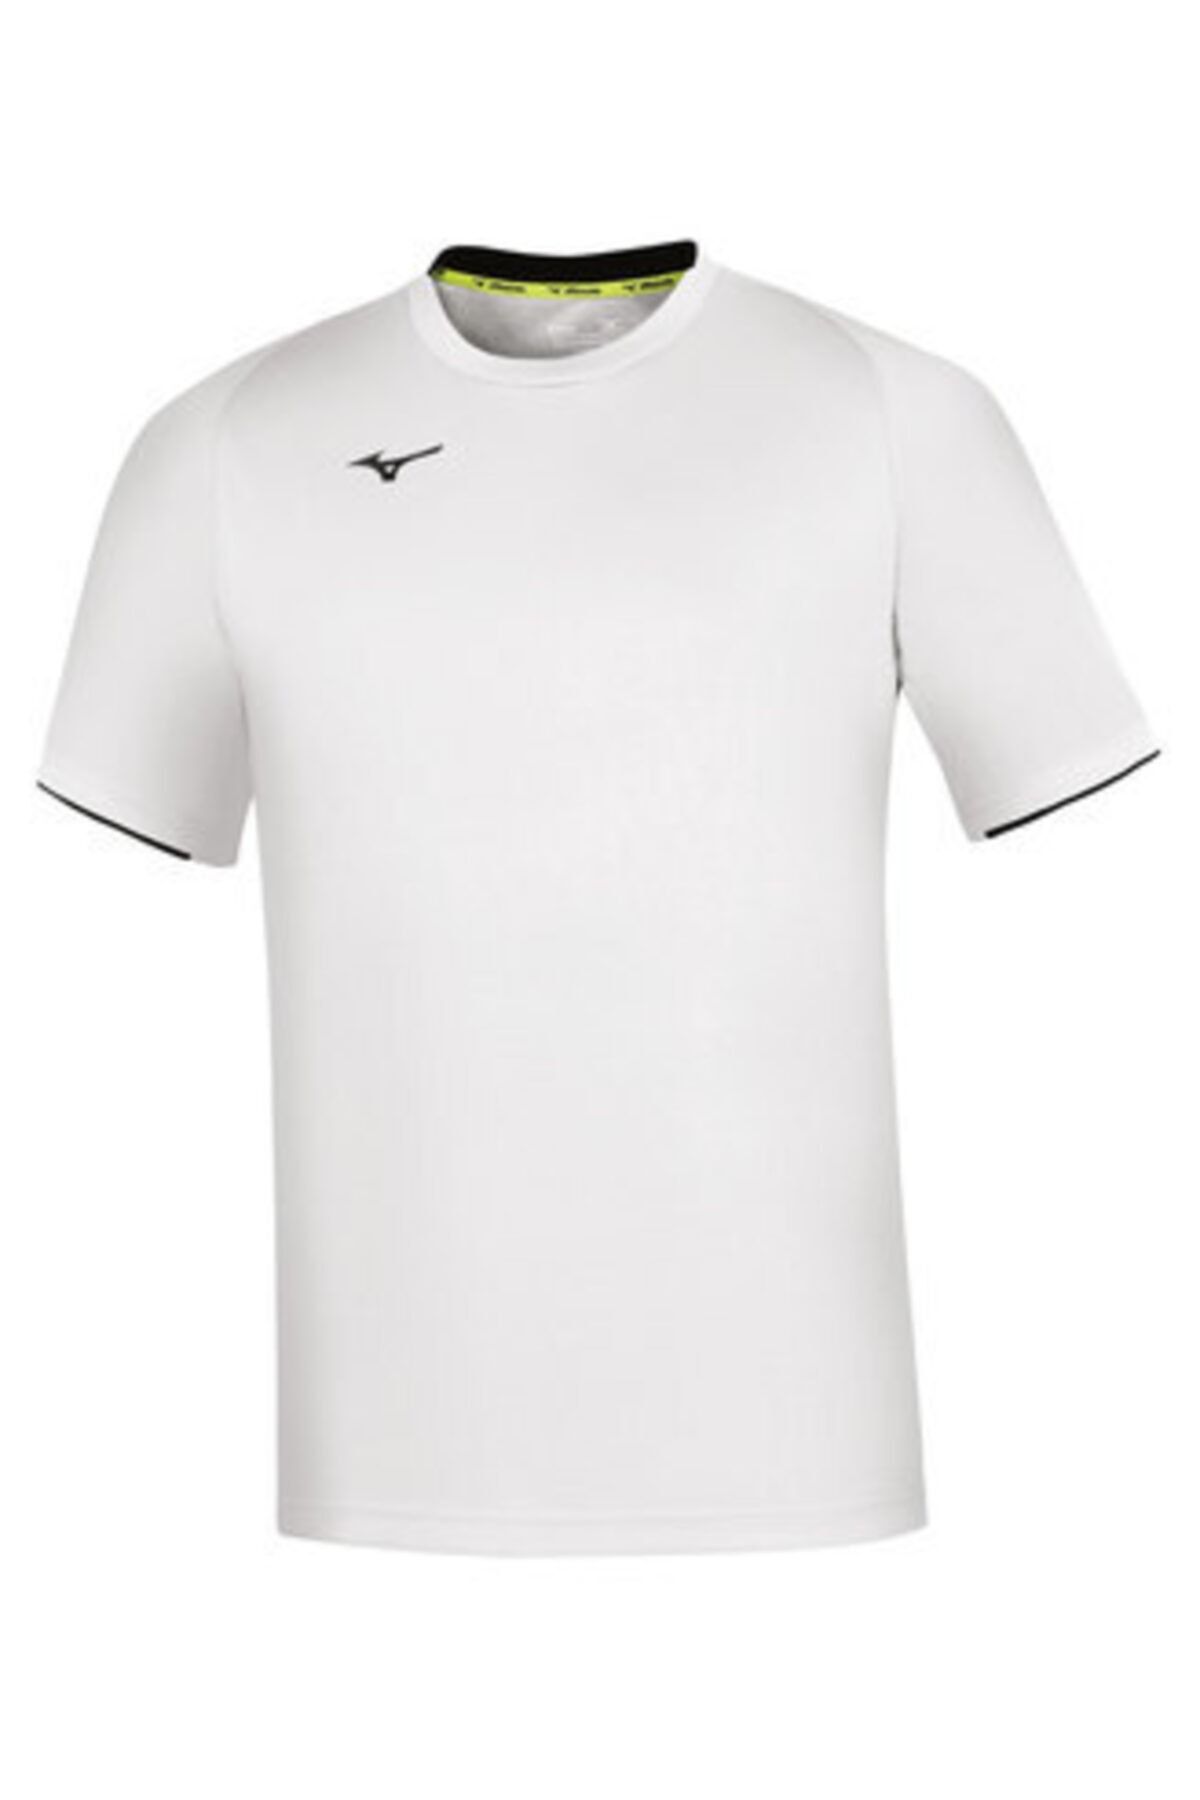 Mizuno Core Ss Erkek T-shirt Beyaz